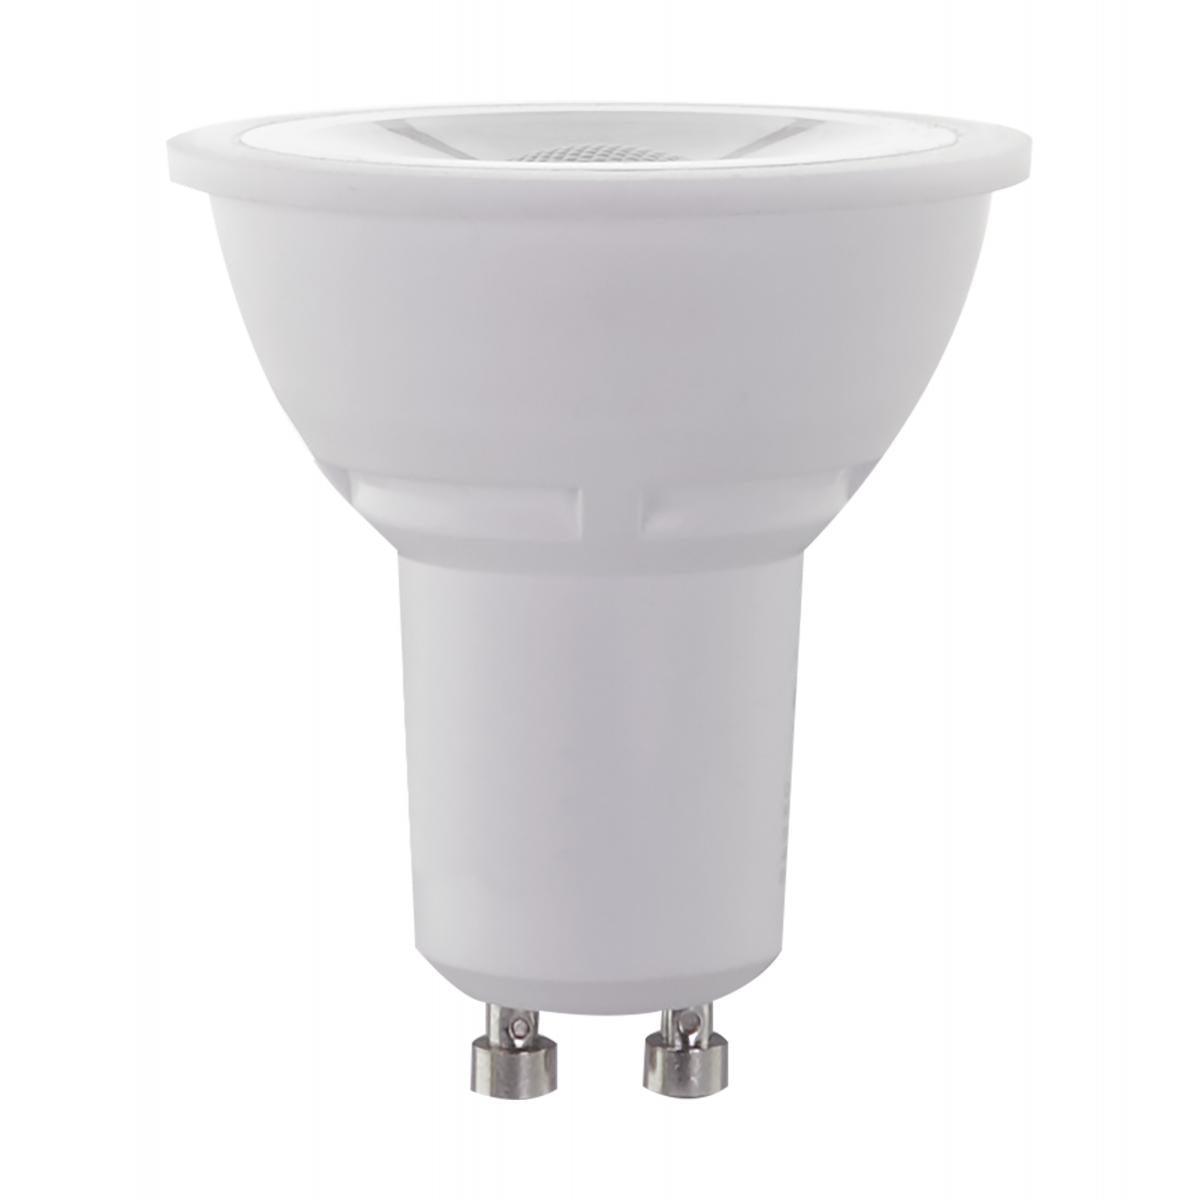 LED MR16 Reflector Bulb, 7 Watt, 500 Lumens, 3000K, GU10 Base, Frosted Finish, Pack Of 2